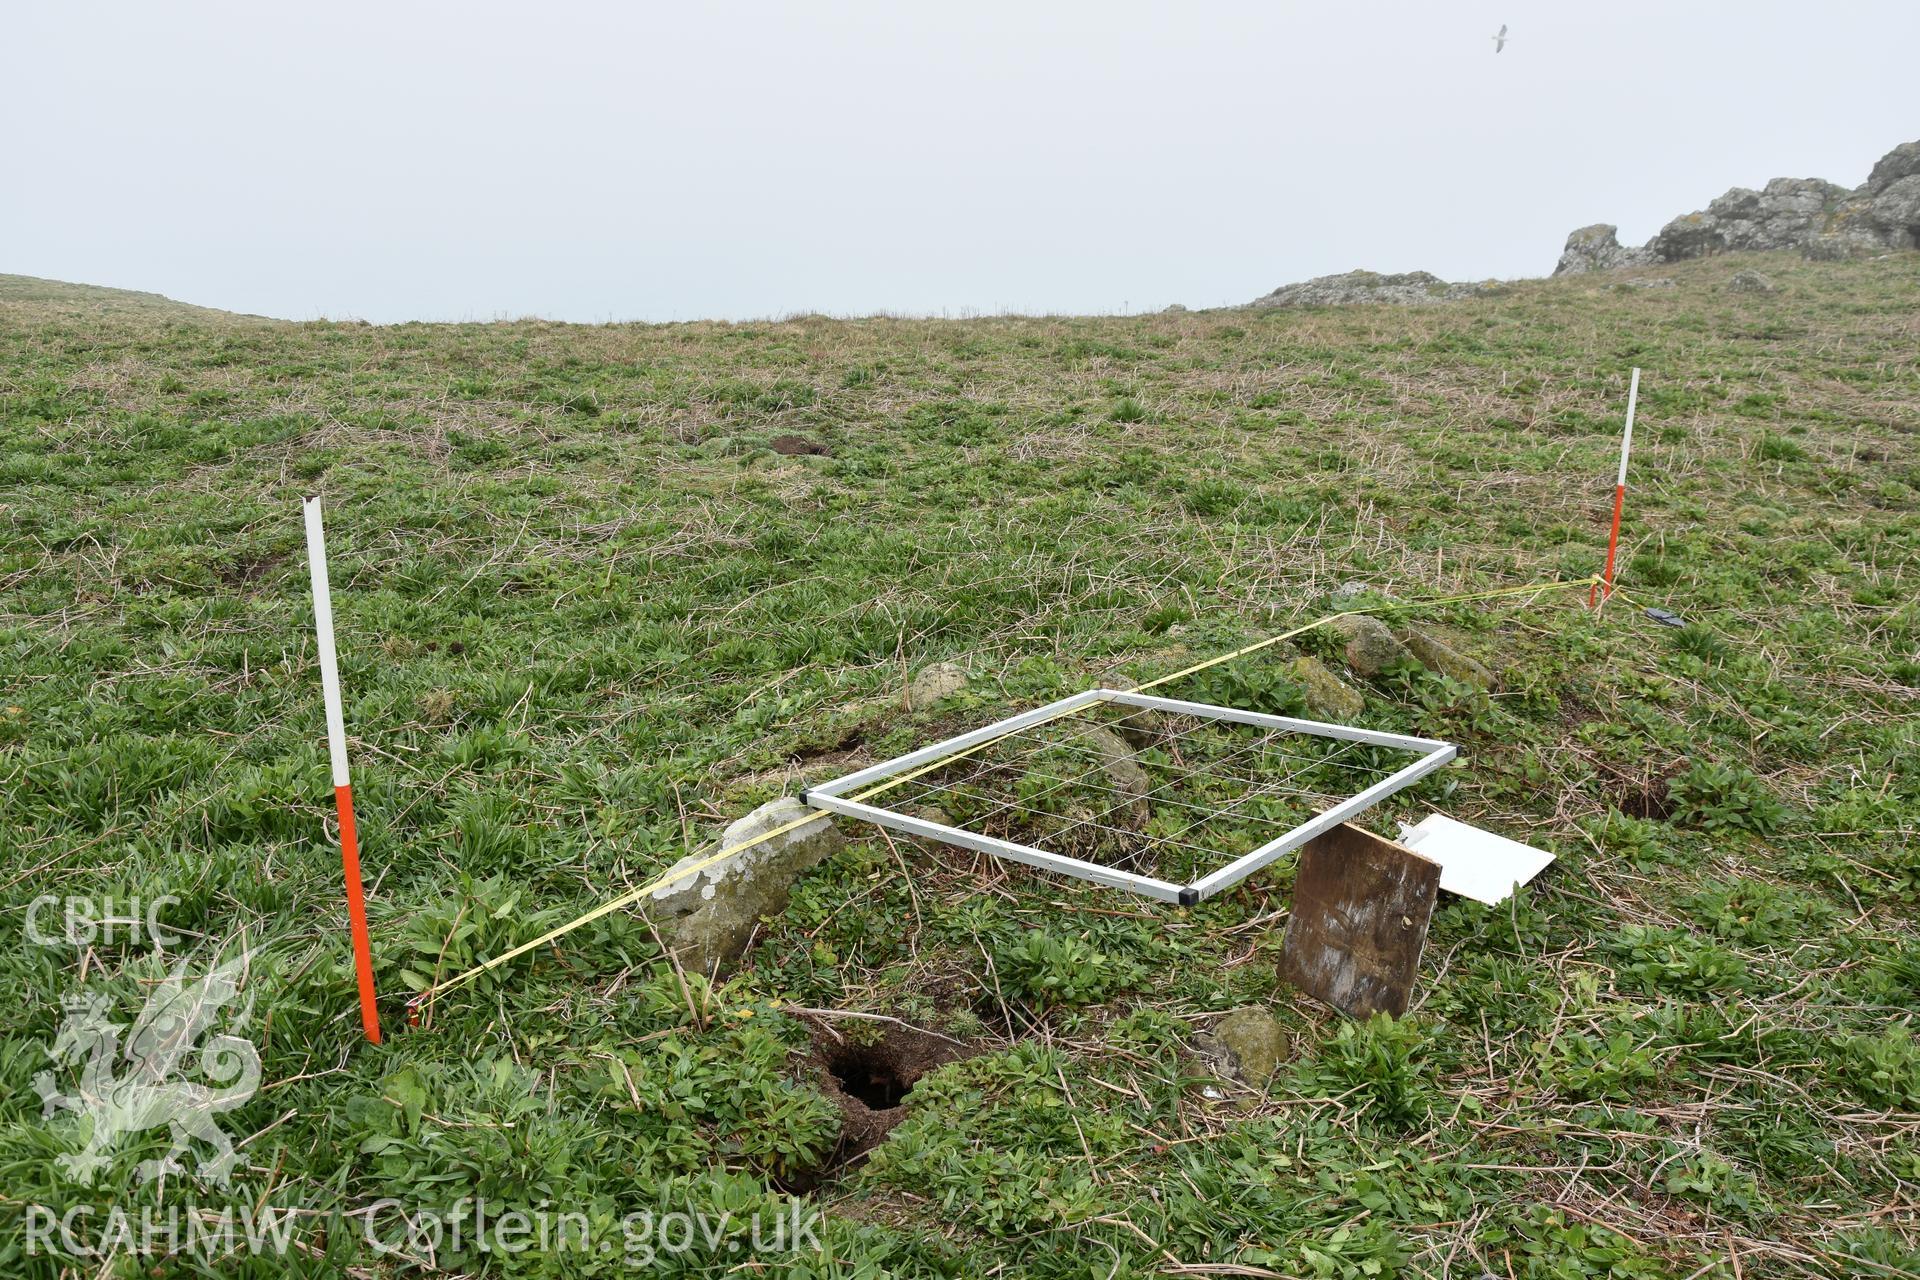 Skomer Island cairn group 1. Field survey 19 April 2018. Cairn C